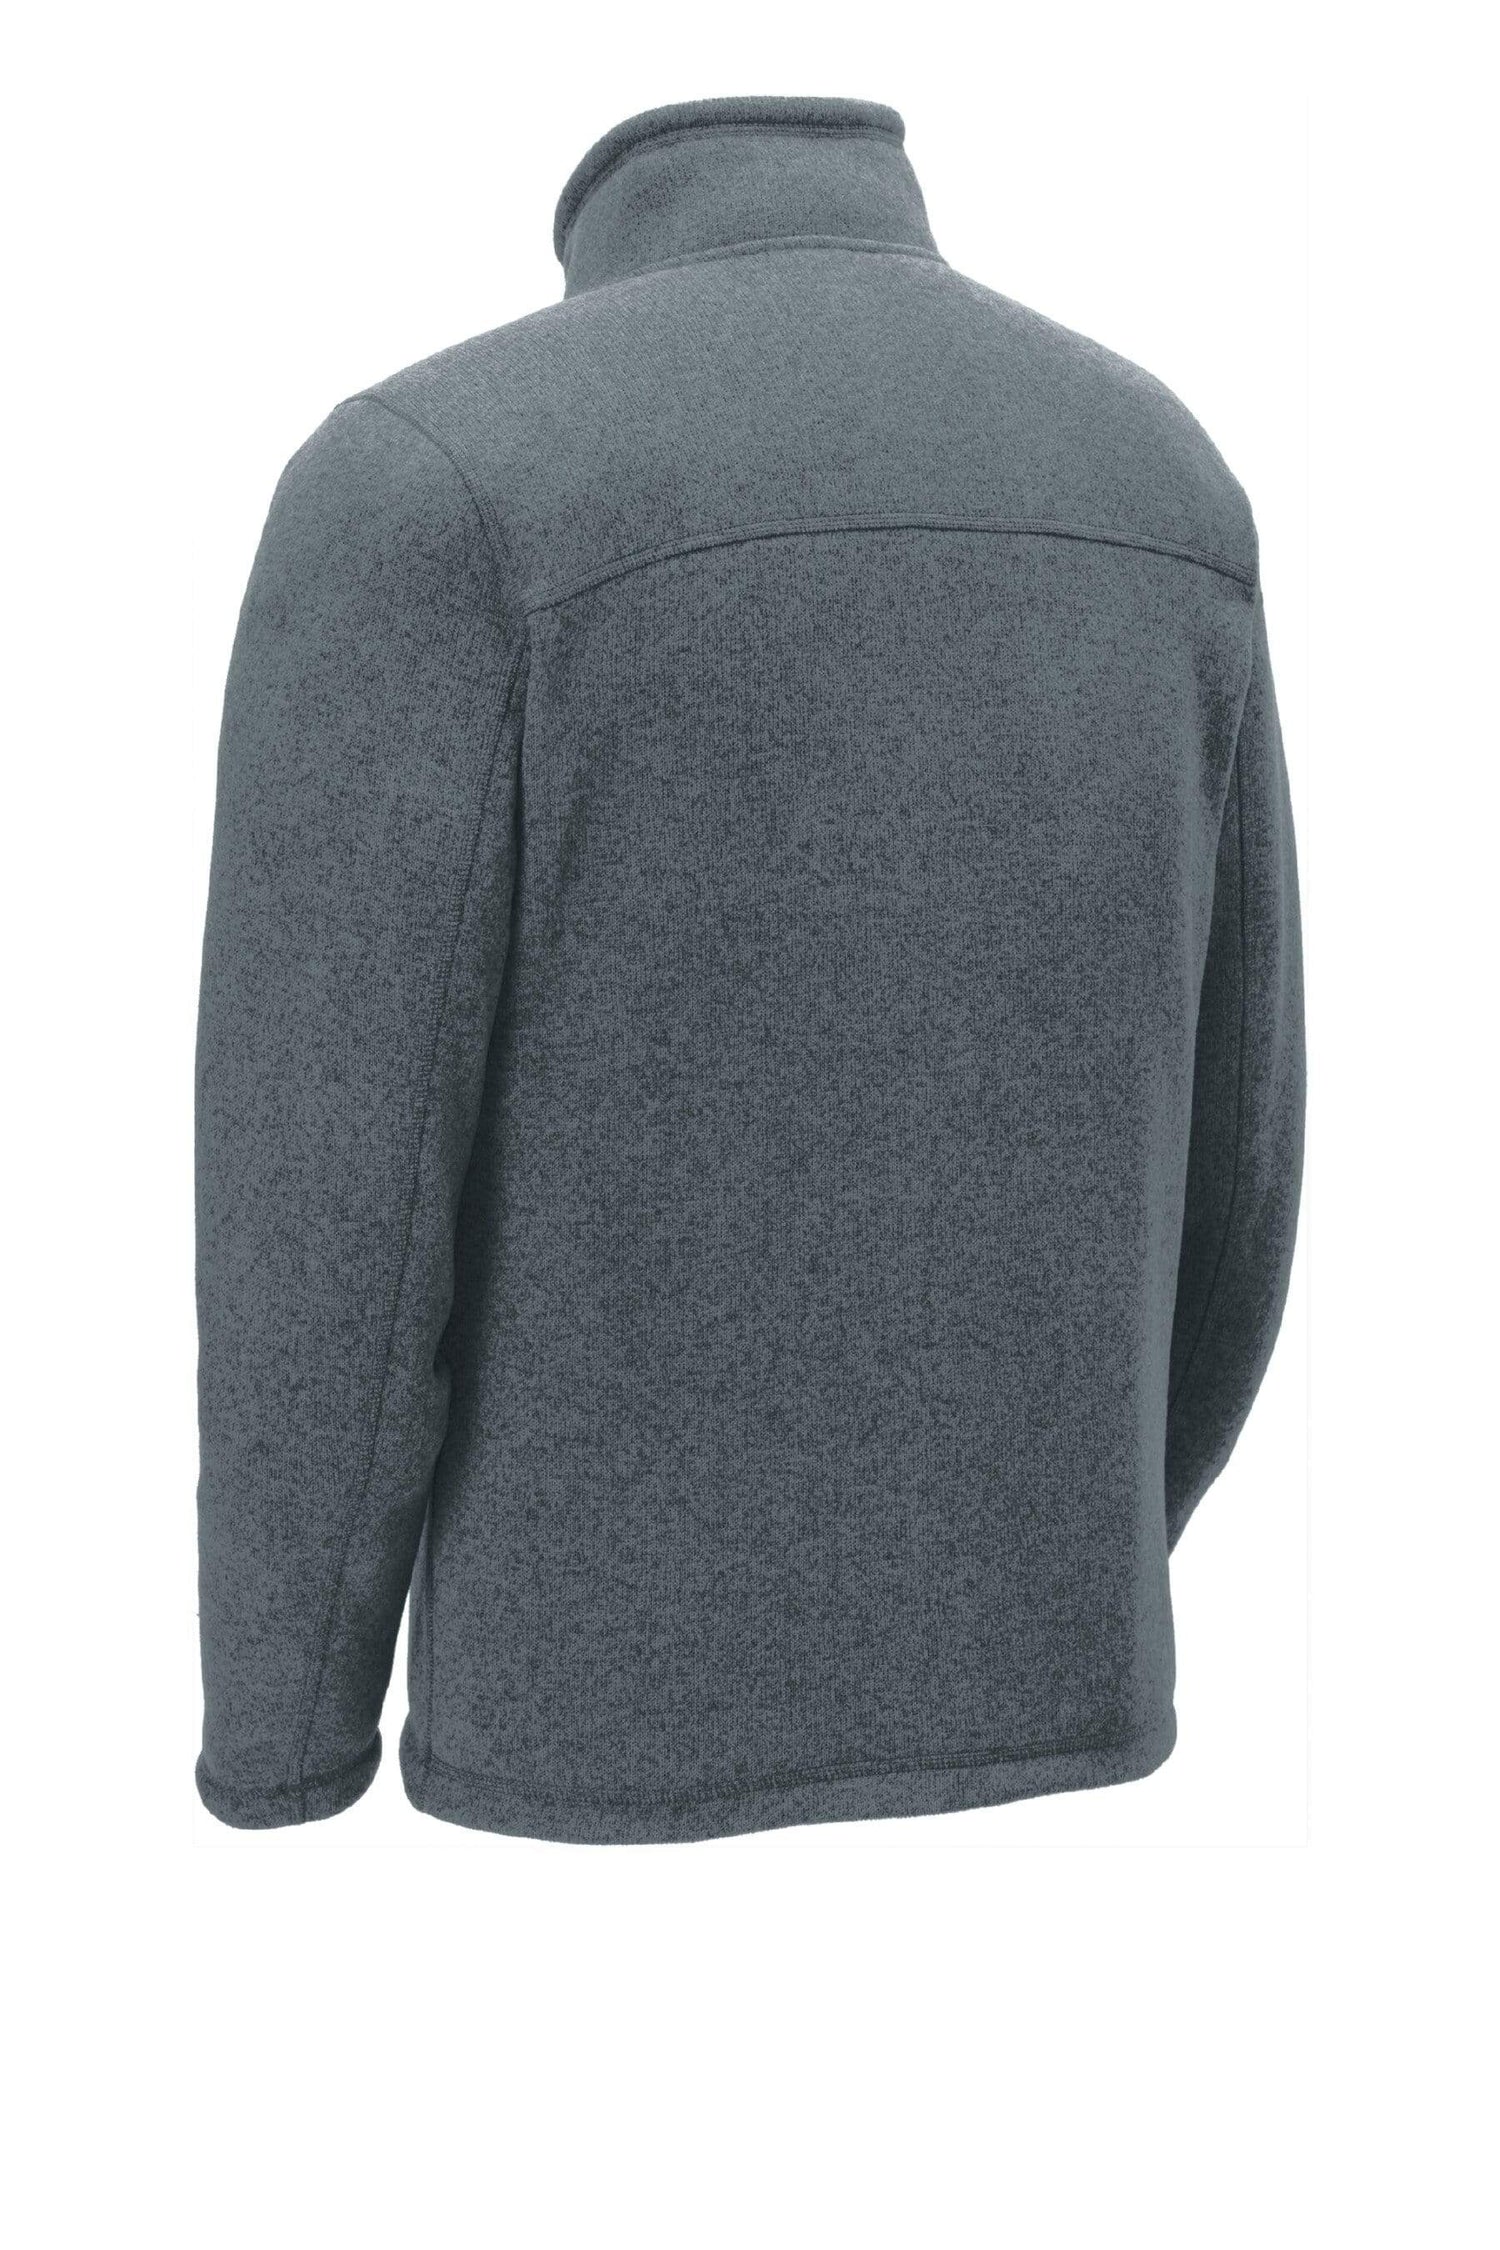 Branded North Face Sweater Fleece Jacket Black Heather